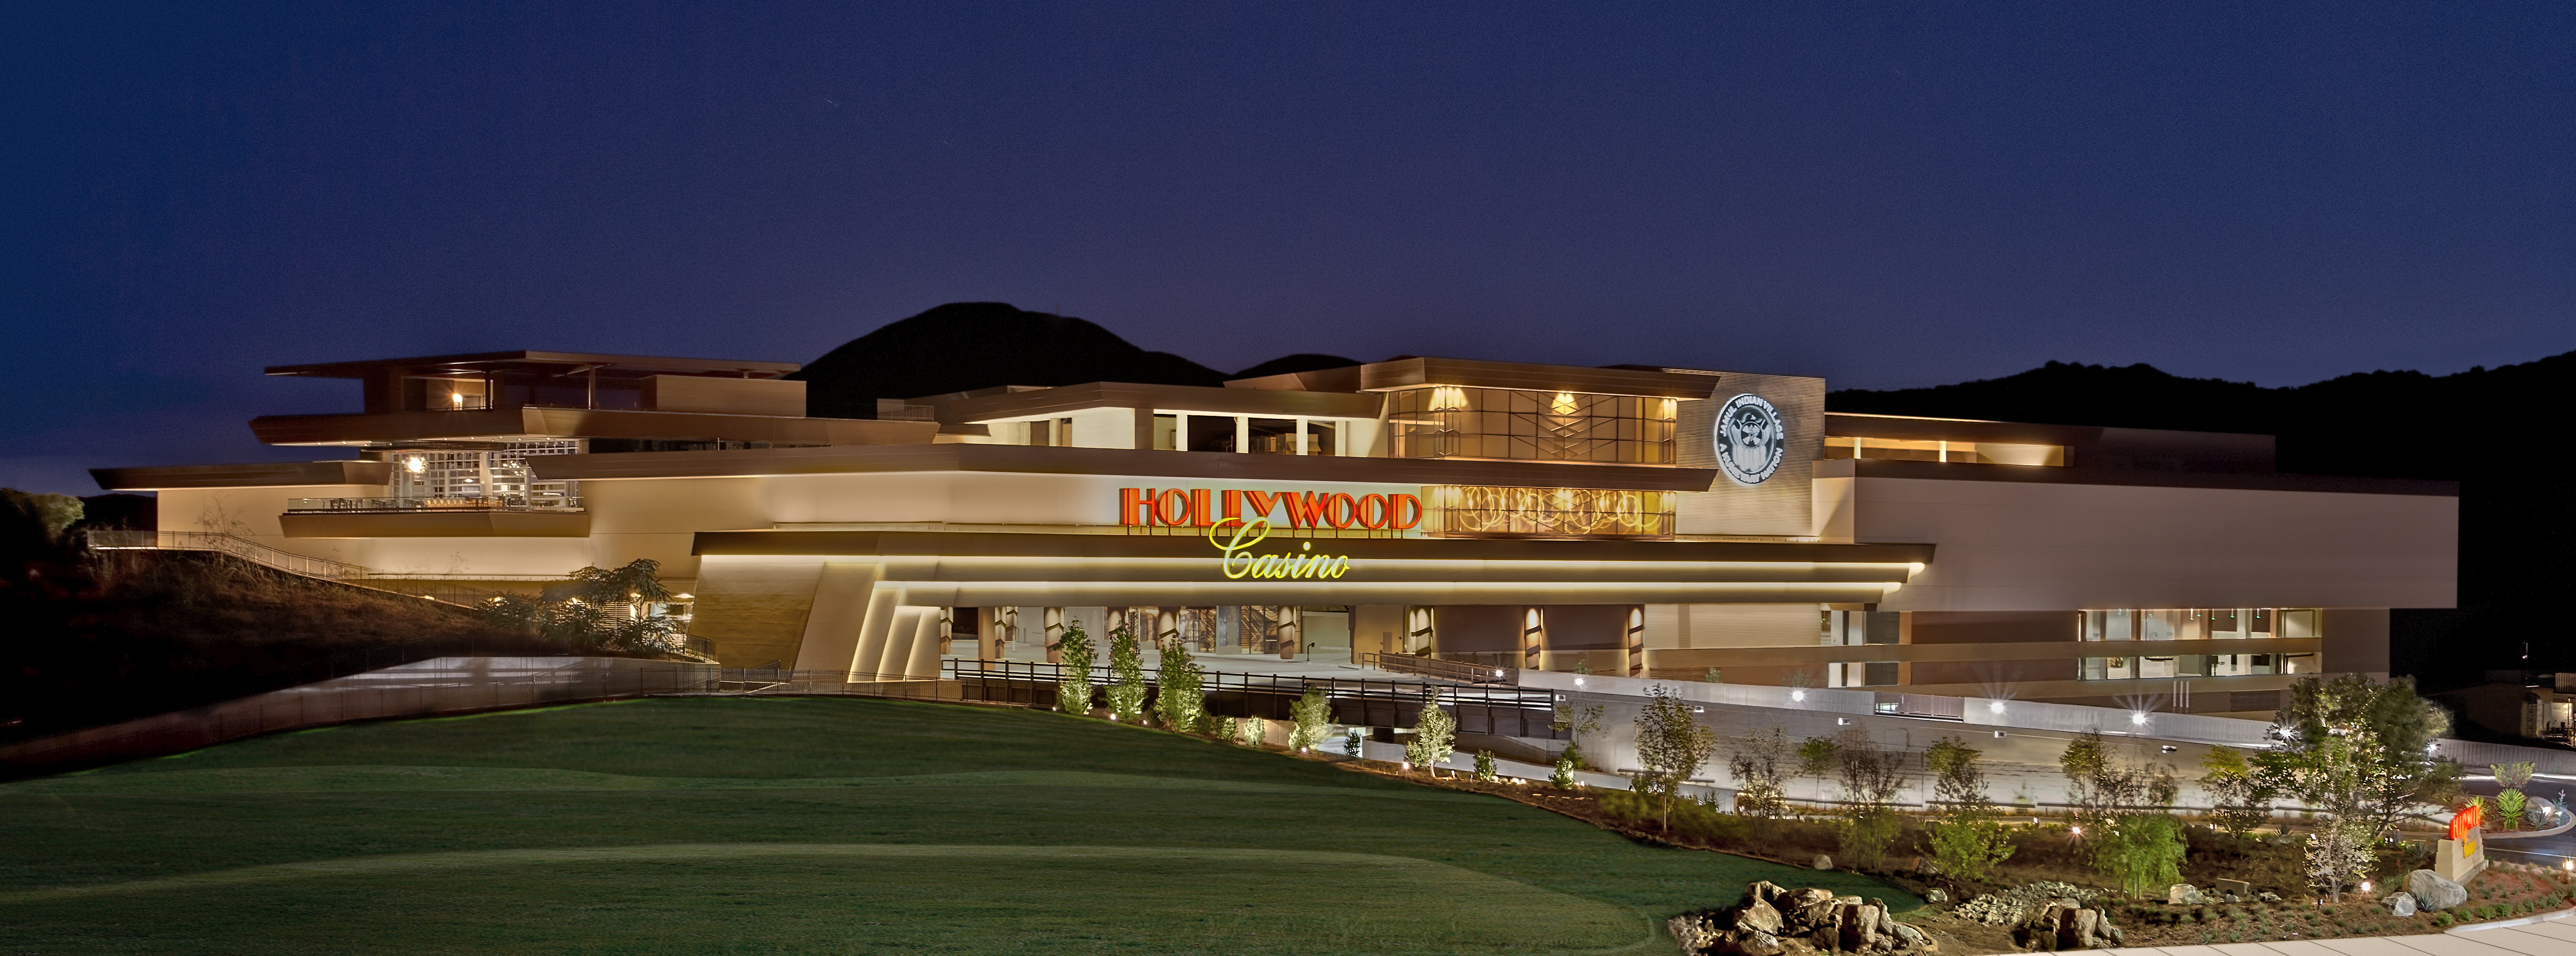 The $400 million Hollywood Casino Jamul-San Diego